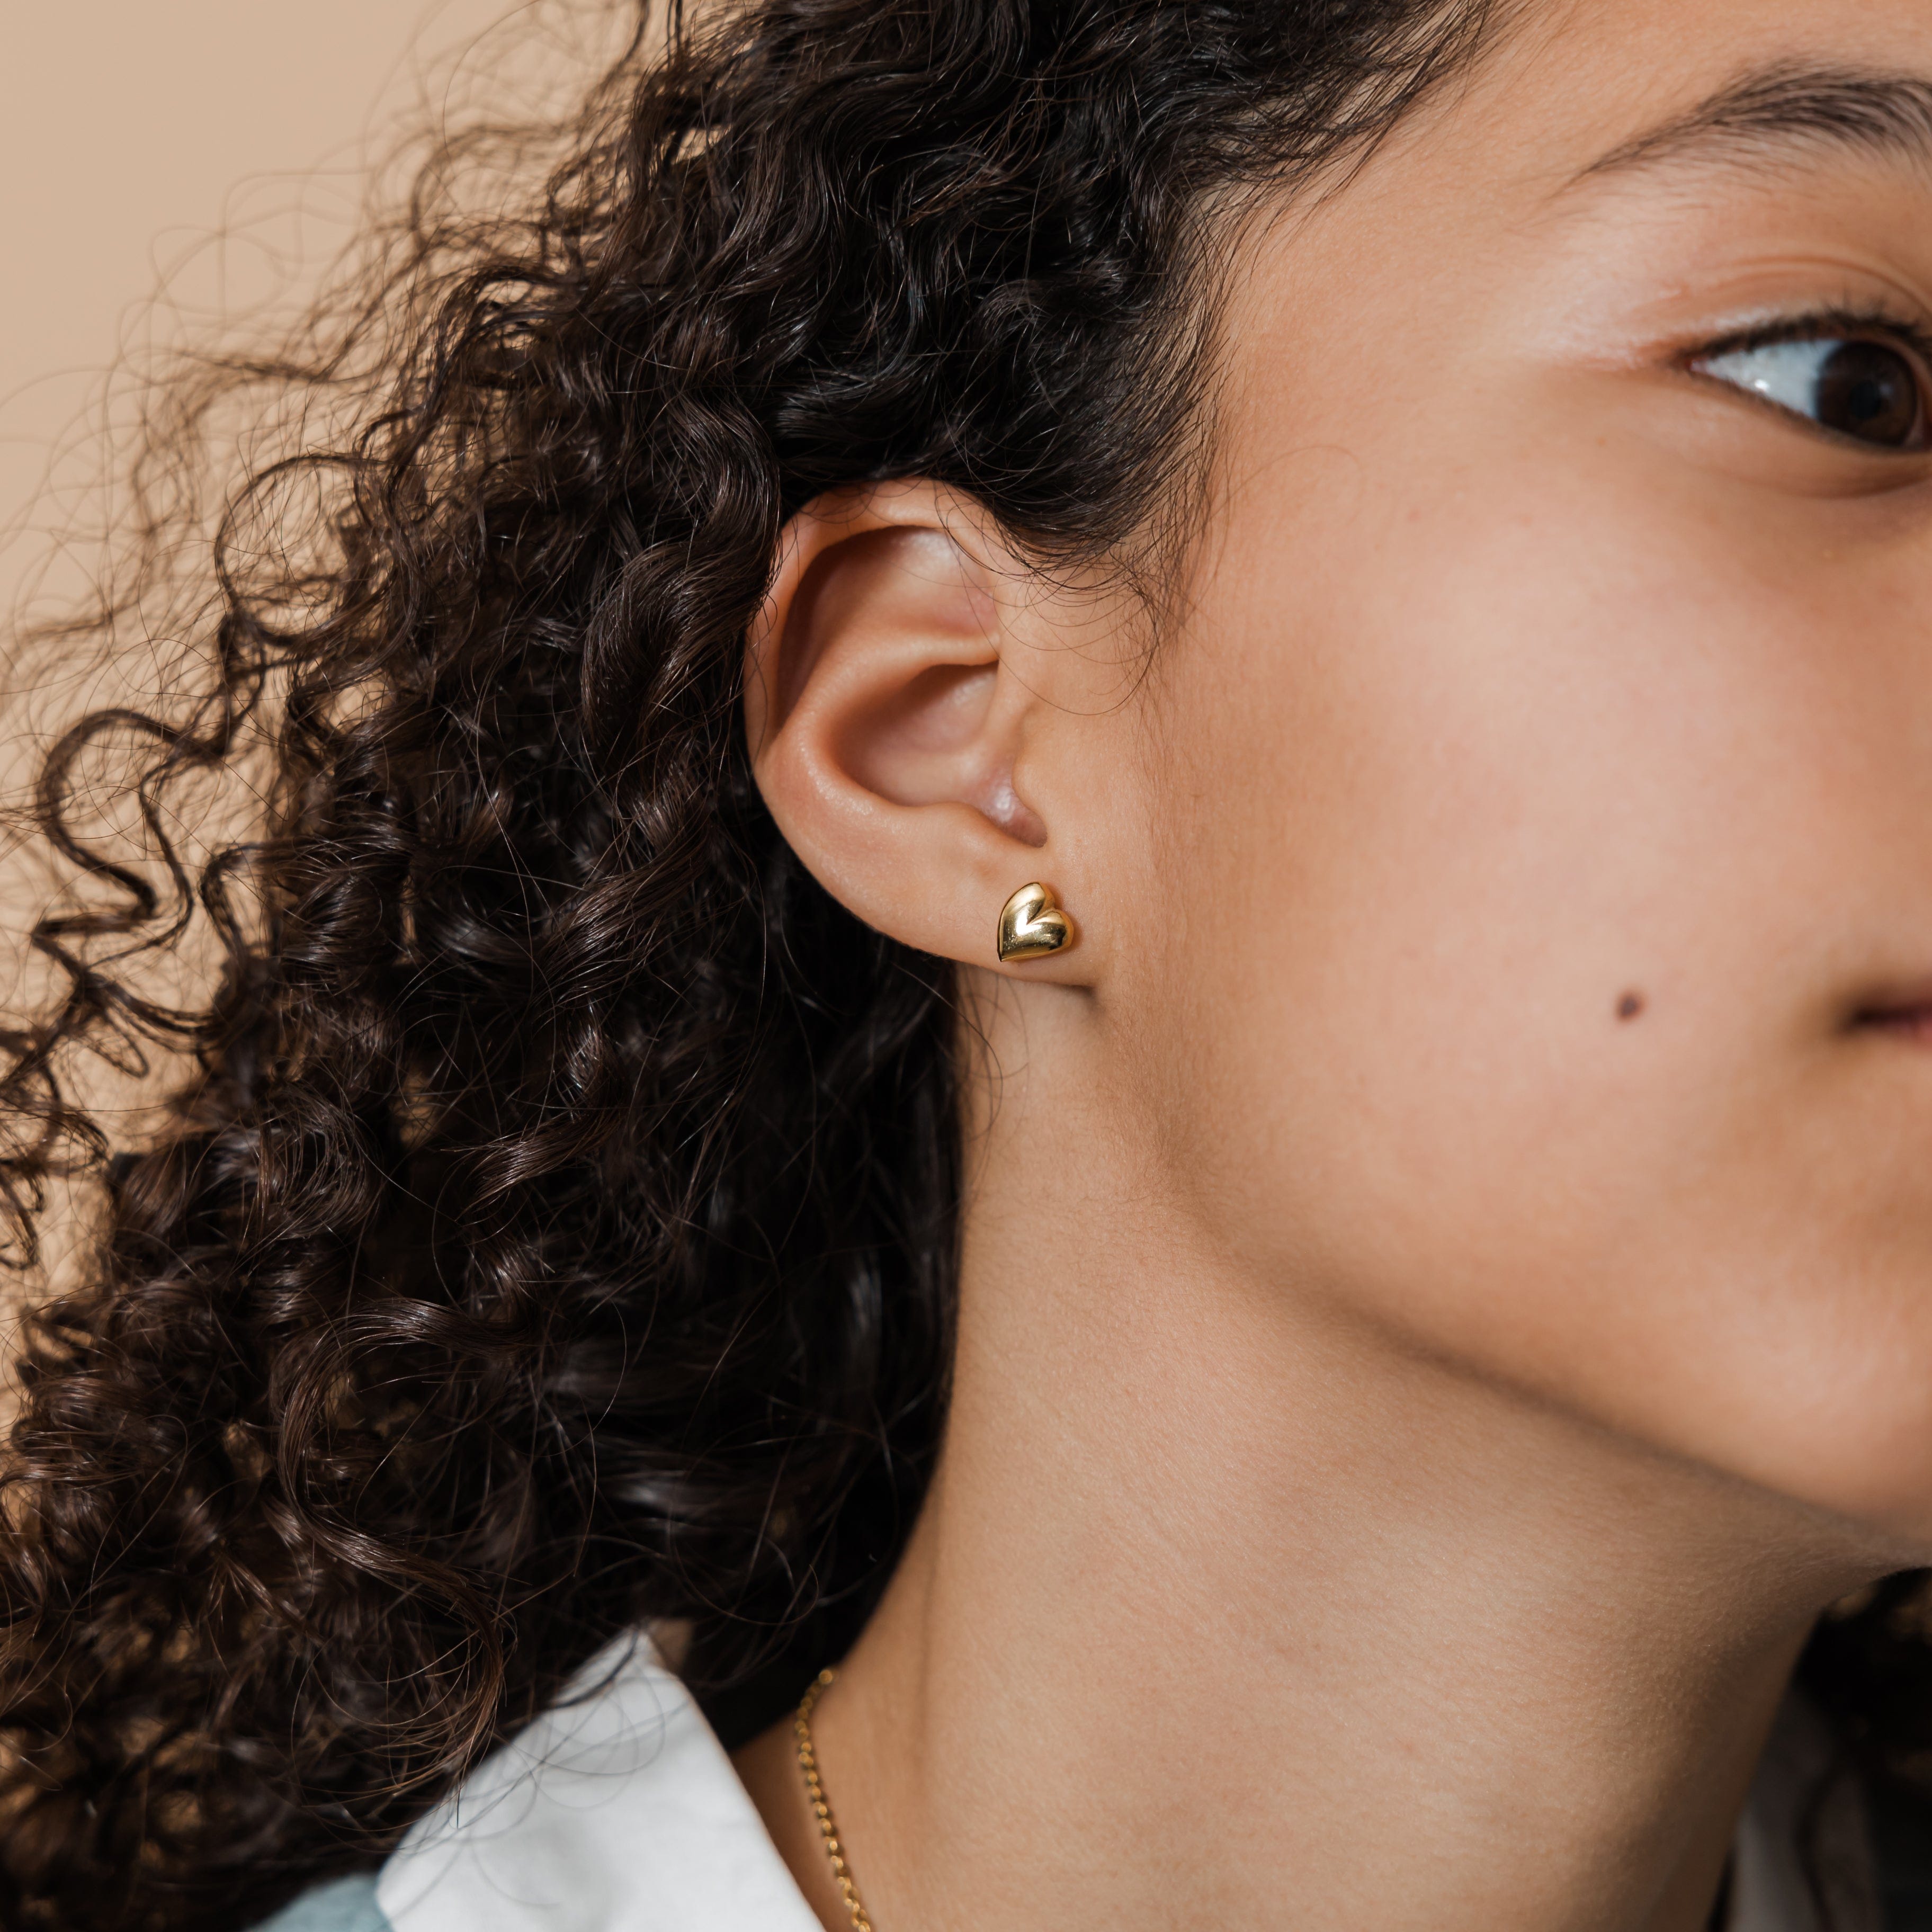 Amazon.com: Yheakne Boho Cz Circle Cuff Earrings Gold Double Ring Helix Earrings  Non Pierced Clip on Earrings Minimalist Earcuffs Earring Jewelry for Women  and Teen Girls : Clothing, Shoes & Jewelry